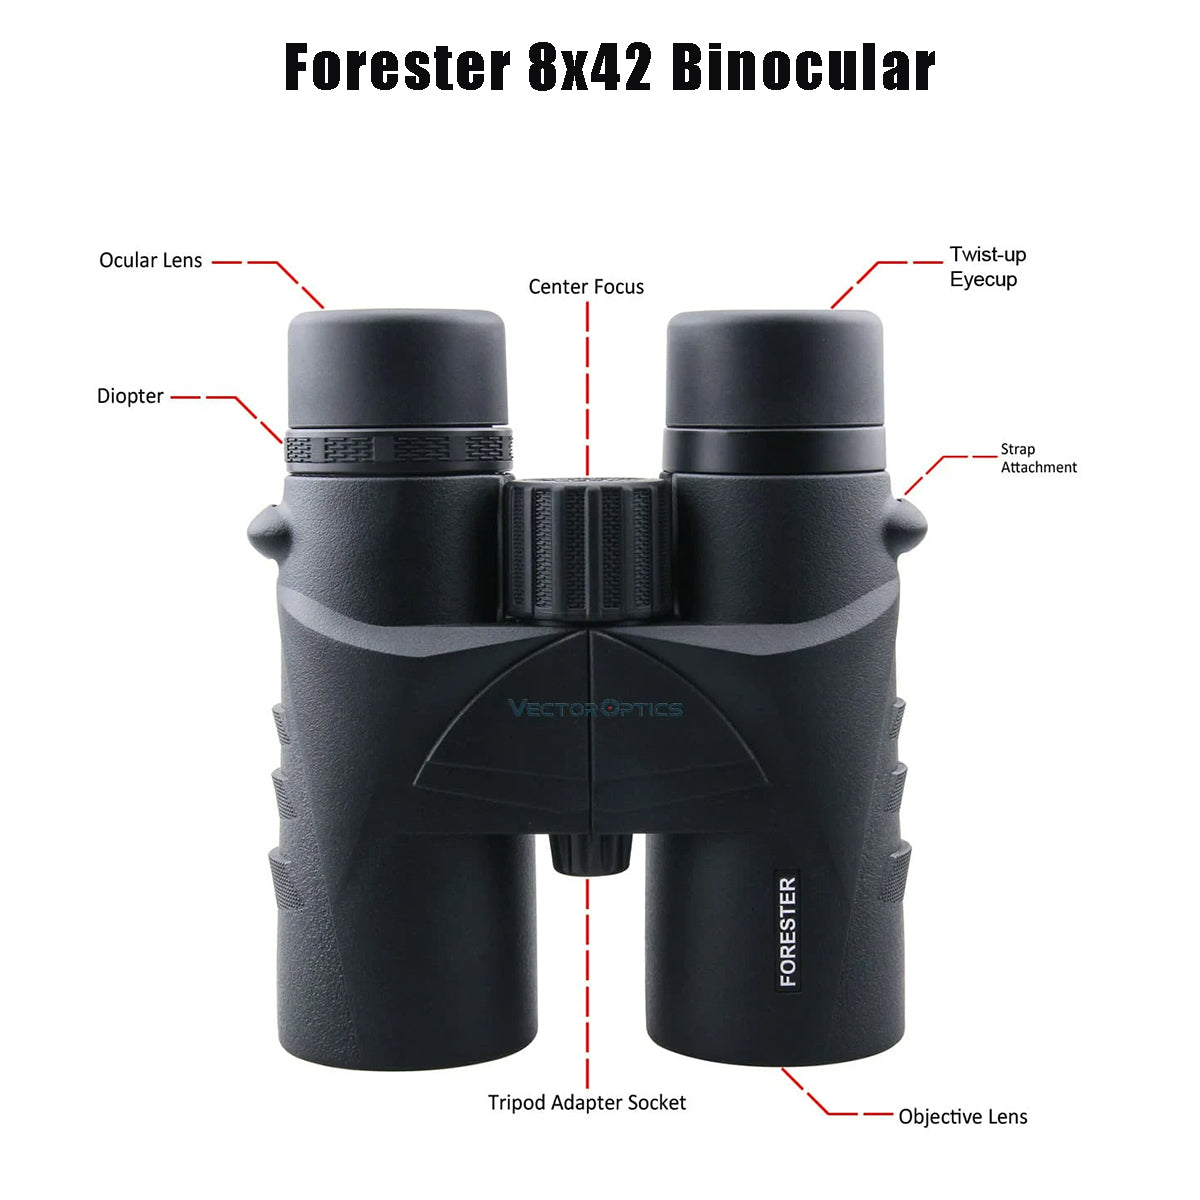 Forester 8x42 Binocular dimension